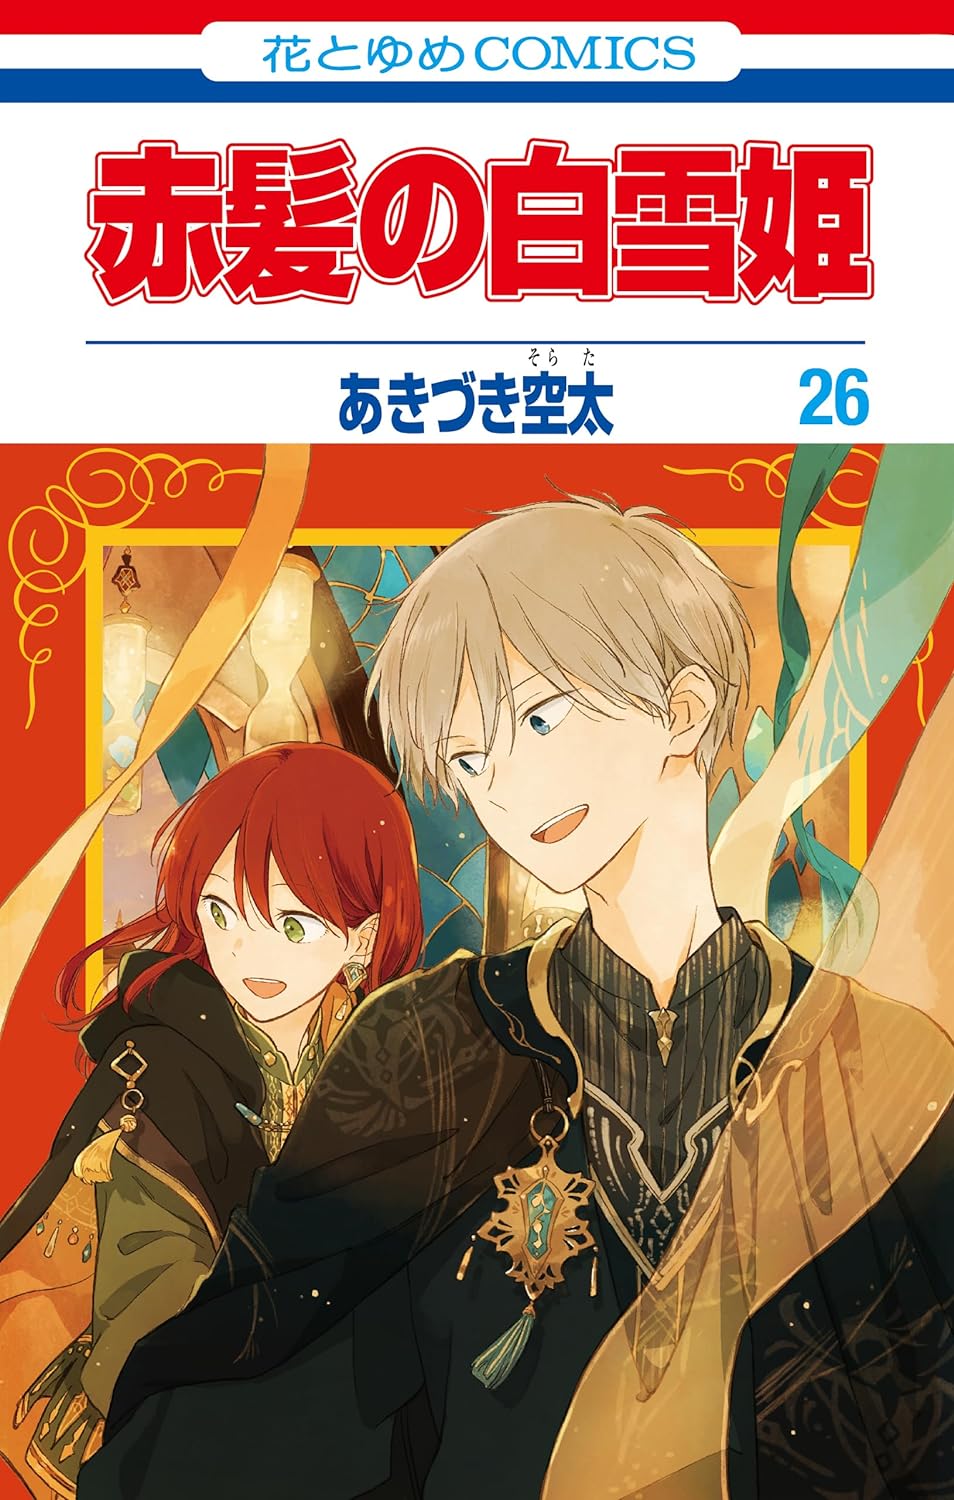 Akagami no Shirayuki-hime Manga Cover Volume 26